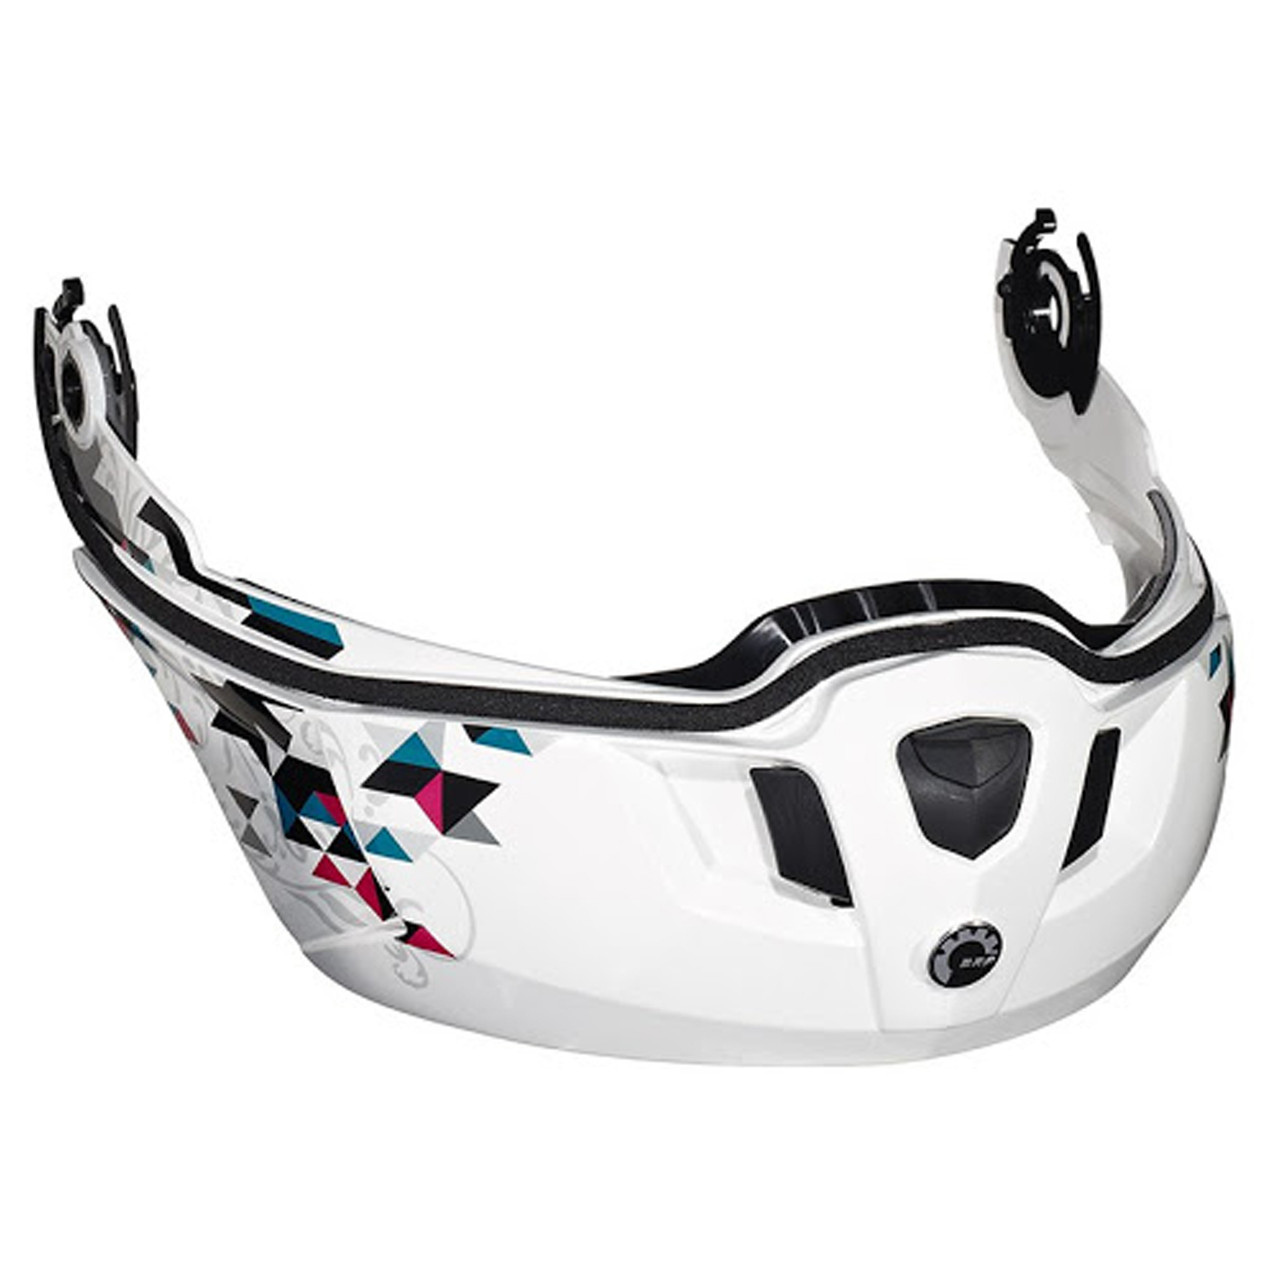 Ski-Doo New OEM, 2014 RPM Jaw For Ladies' Modular 2 Chroma Helmet, 4477840001